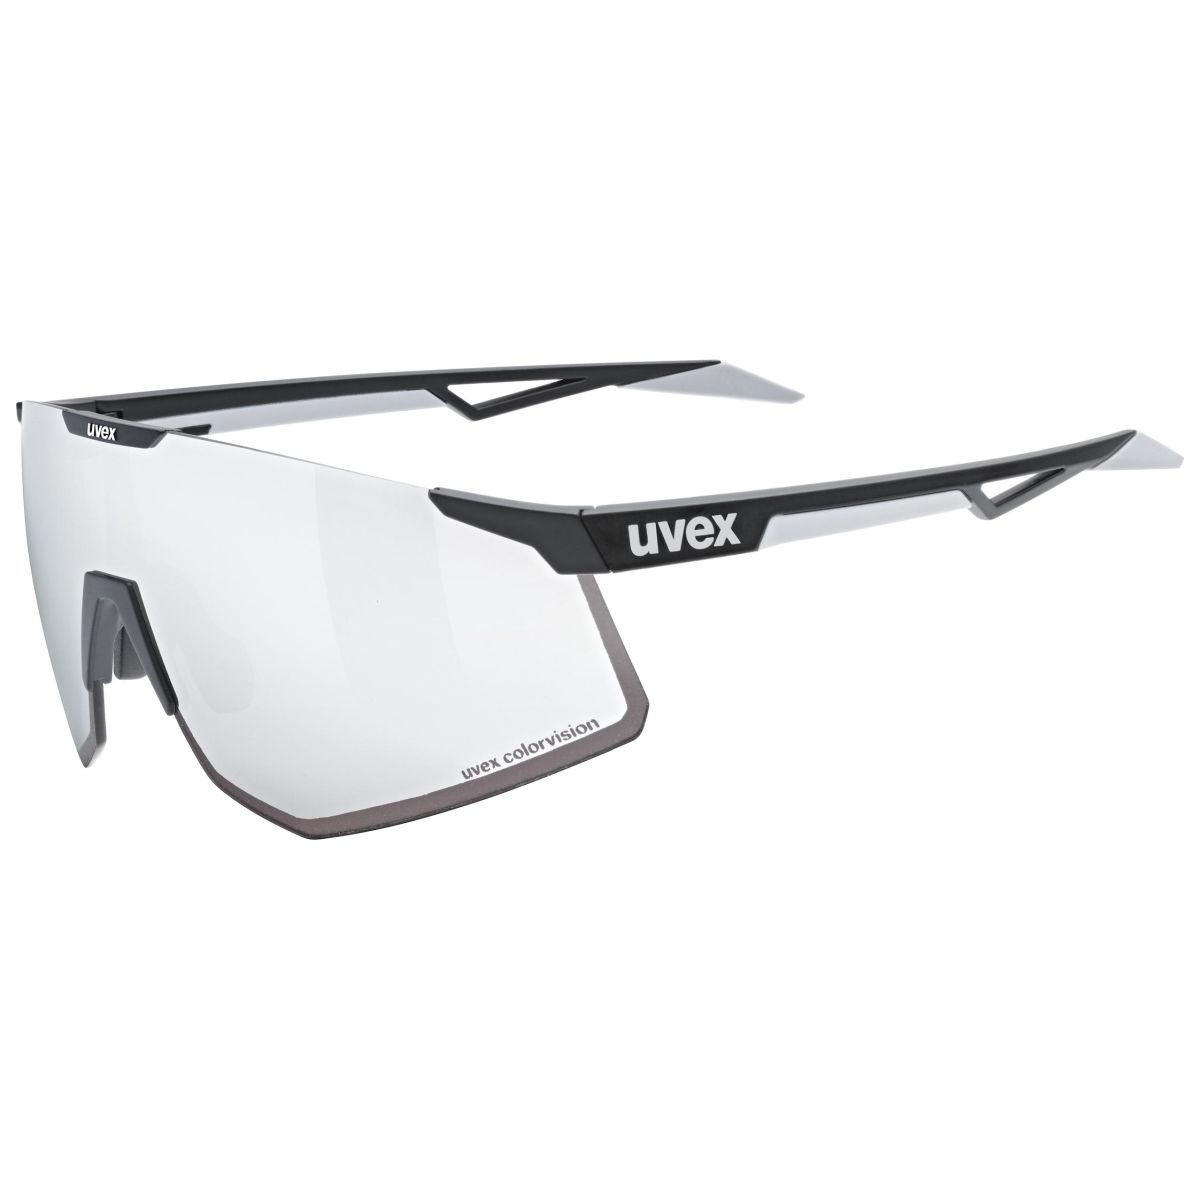 Productfoto van Uvex pace perform CV Bril - black matt/mirror silver colorvision